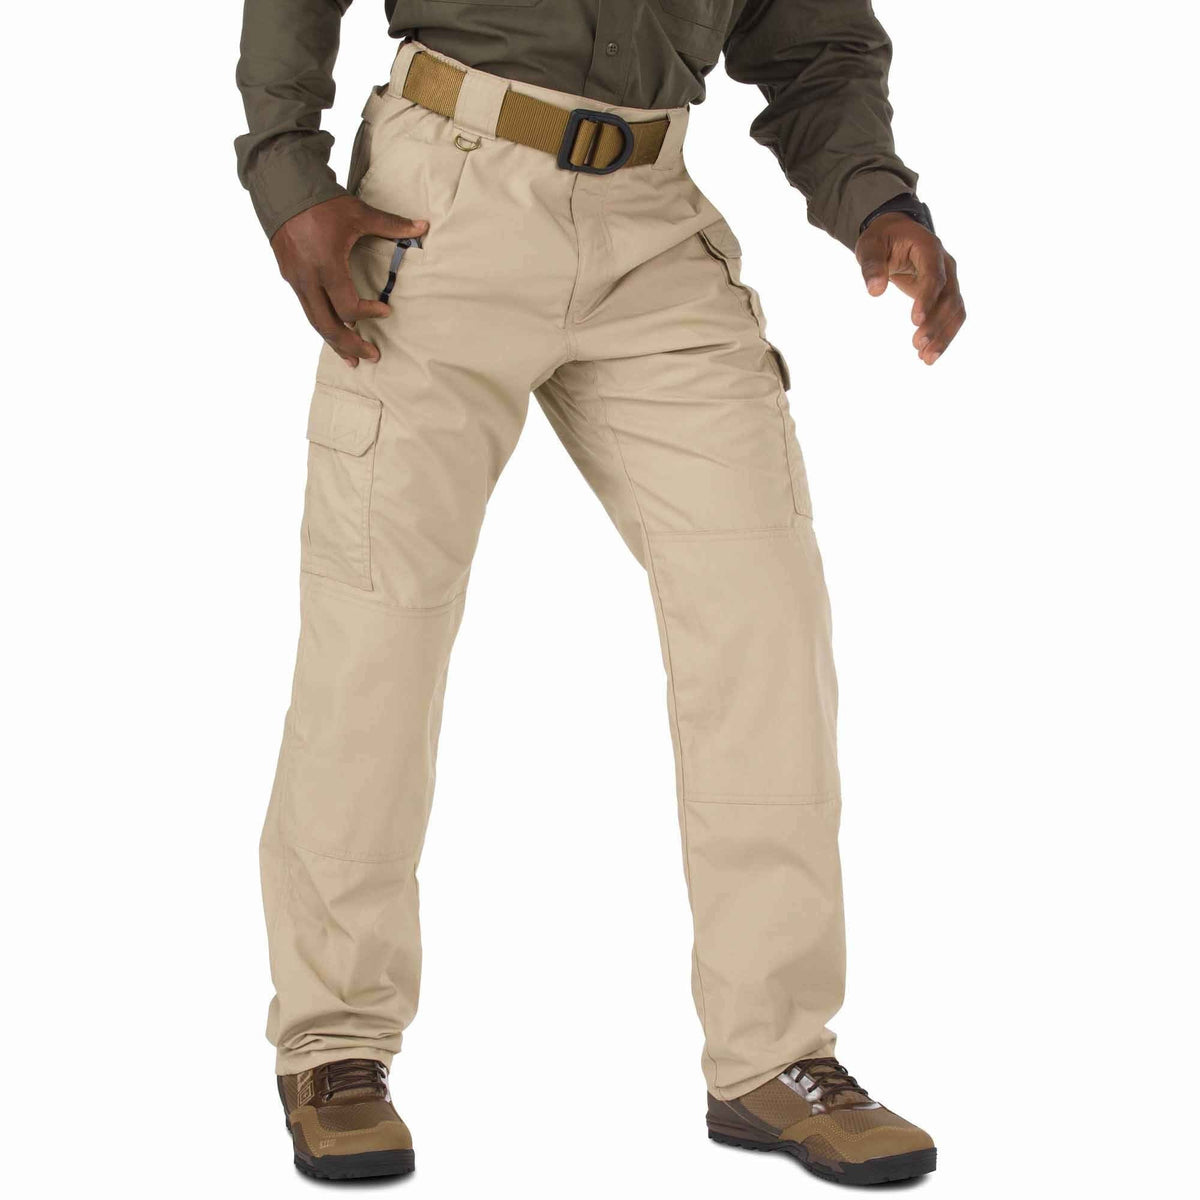 5.11 Tactical Taclite Pro Pants - TDU Khaki Pants 5.11 Tactical 28 30 Tactical Gear Supplier Tactical Distributors Australia